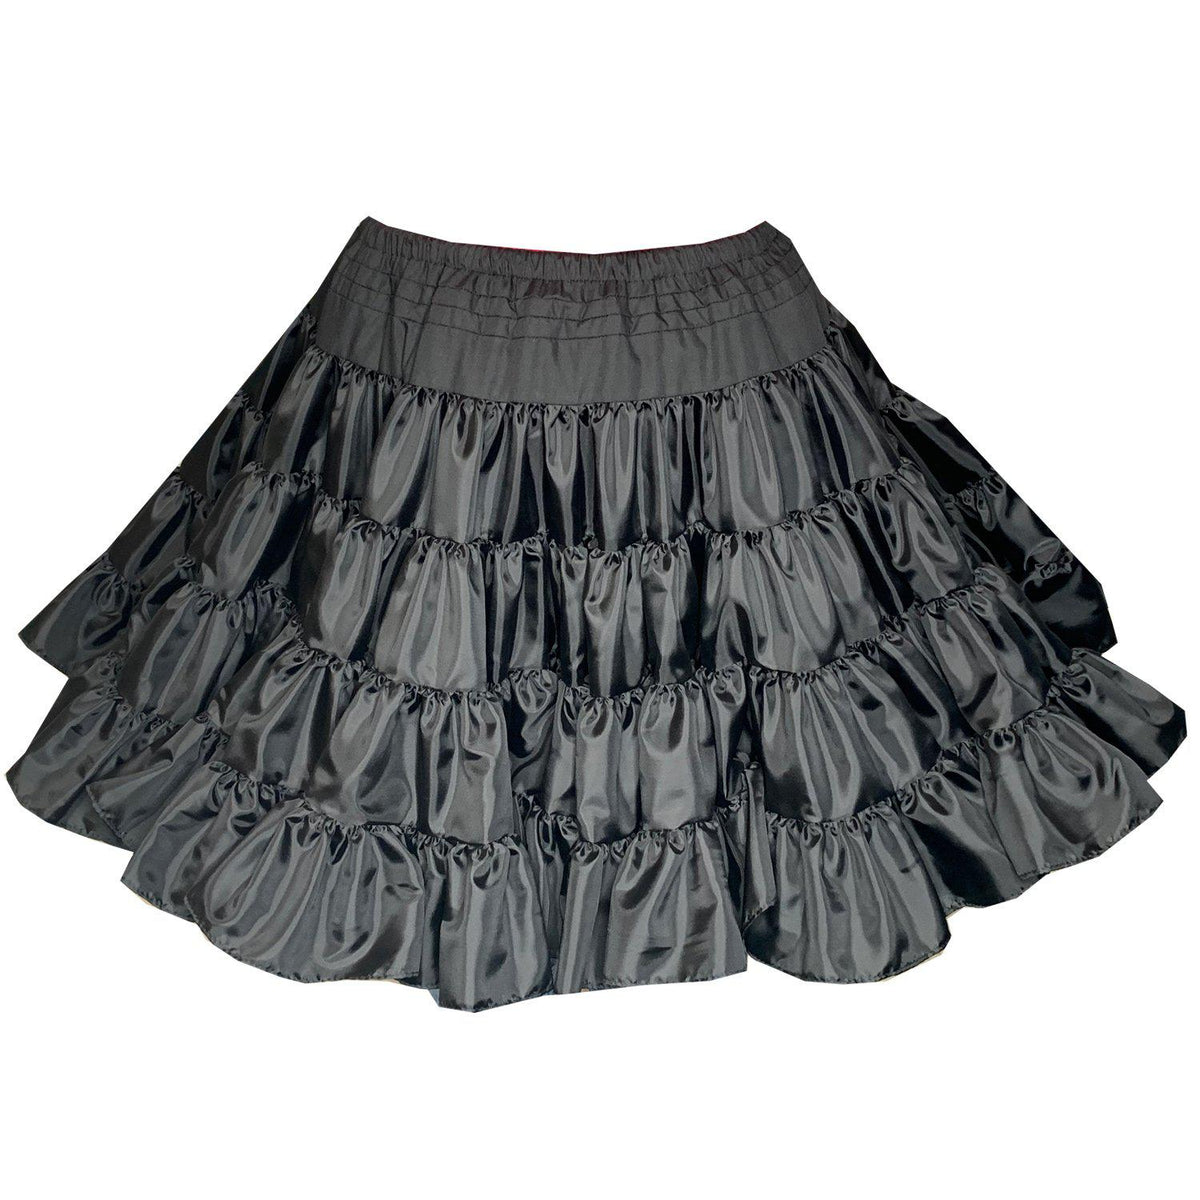 Soft Poly-Liner Petticoat, Petticoat - Square Up Fashions